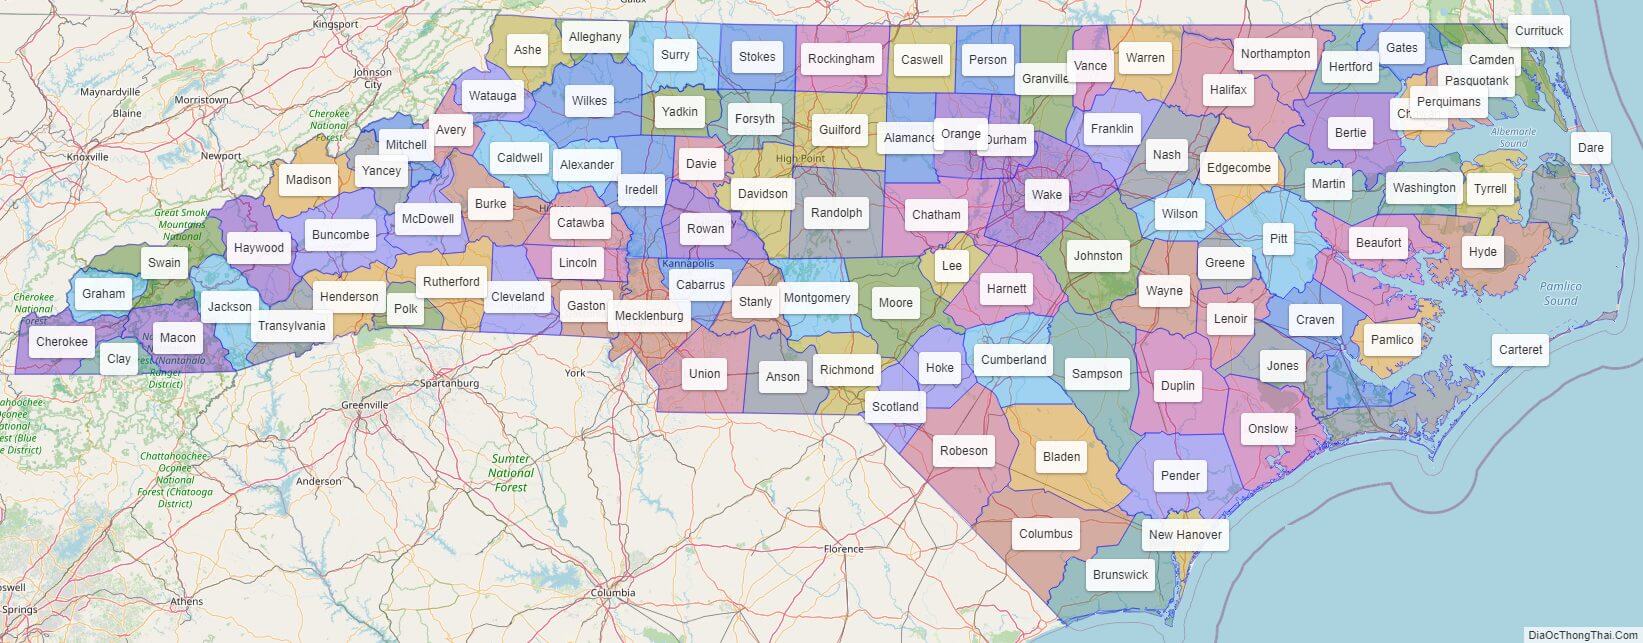 North Carolina County Map with County Names